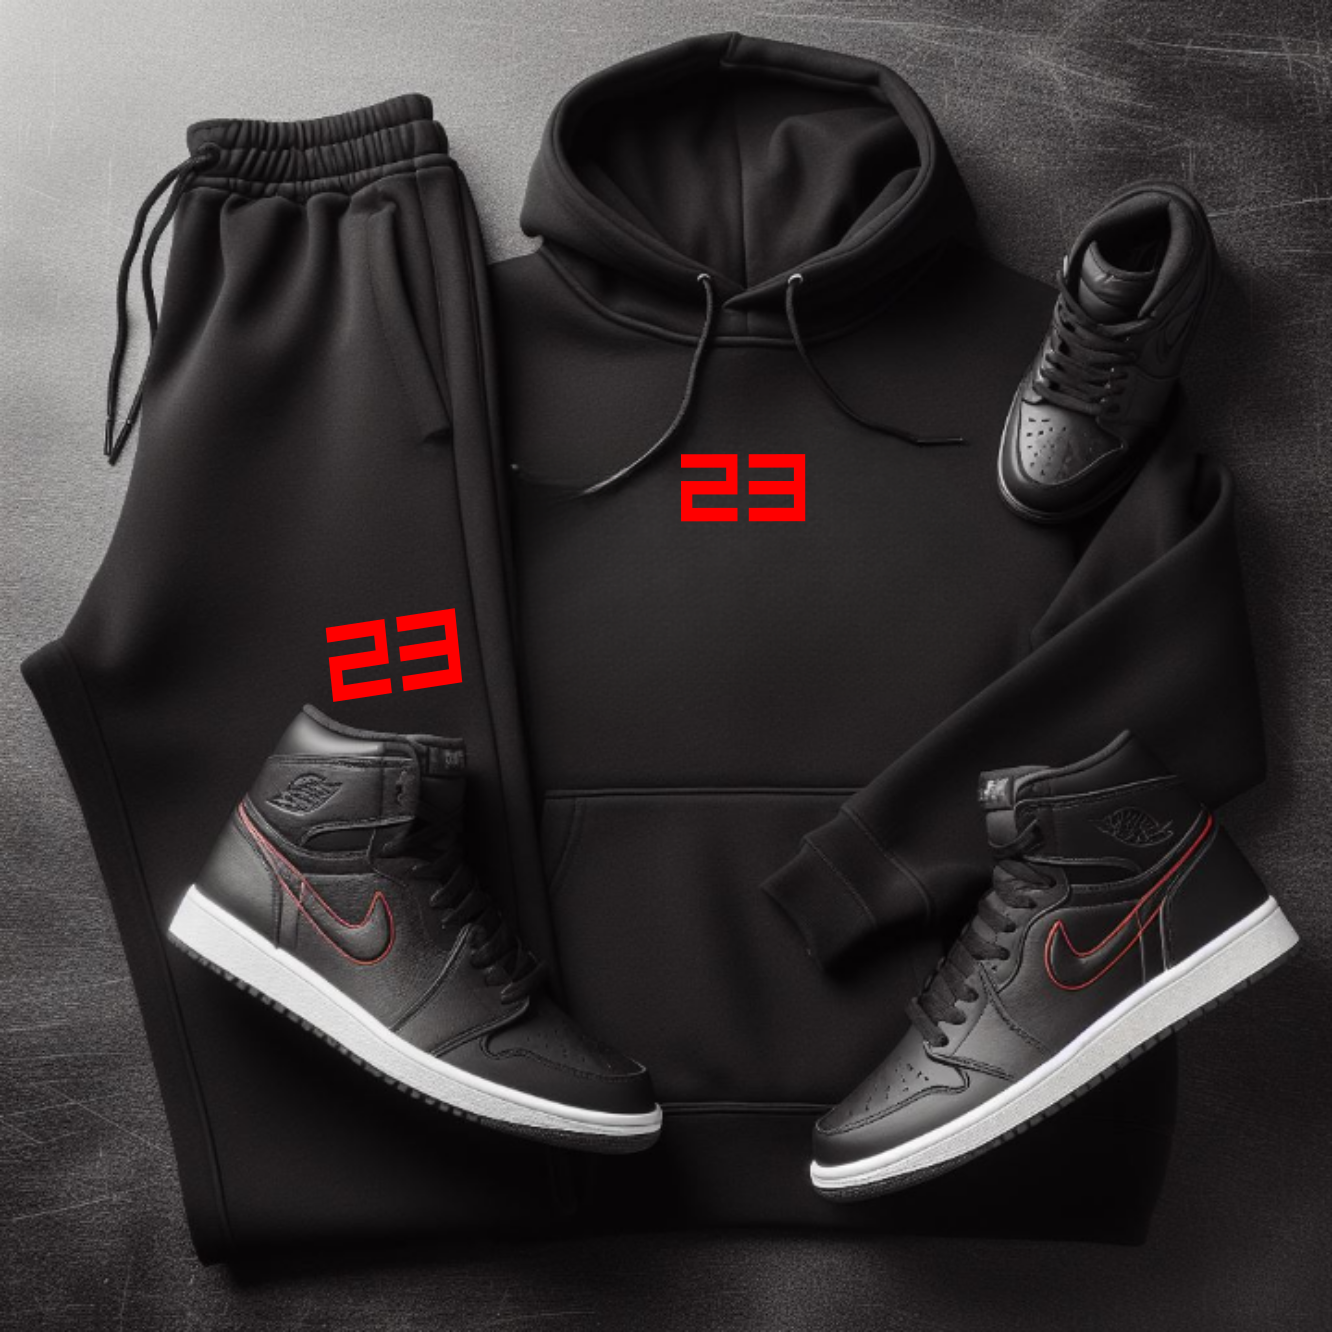 Black 23 Sneaker Sweatsuit To Match Jordan 1 Retro Bred Men's 23 Graphic Hoodie Joggers Set